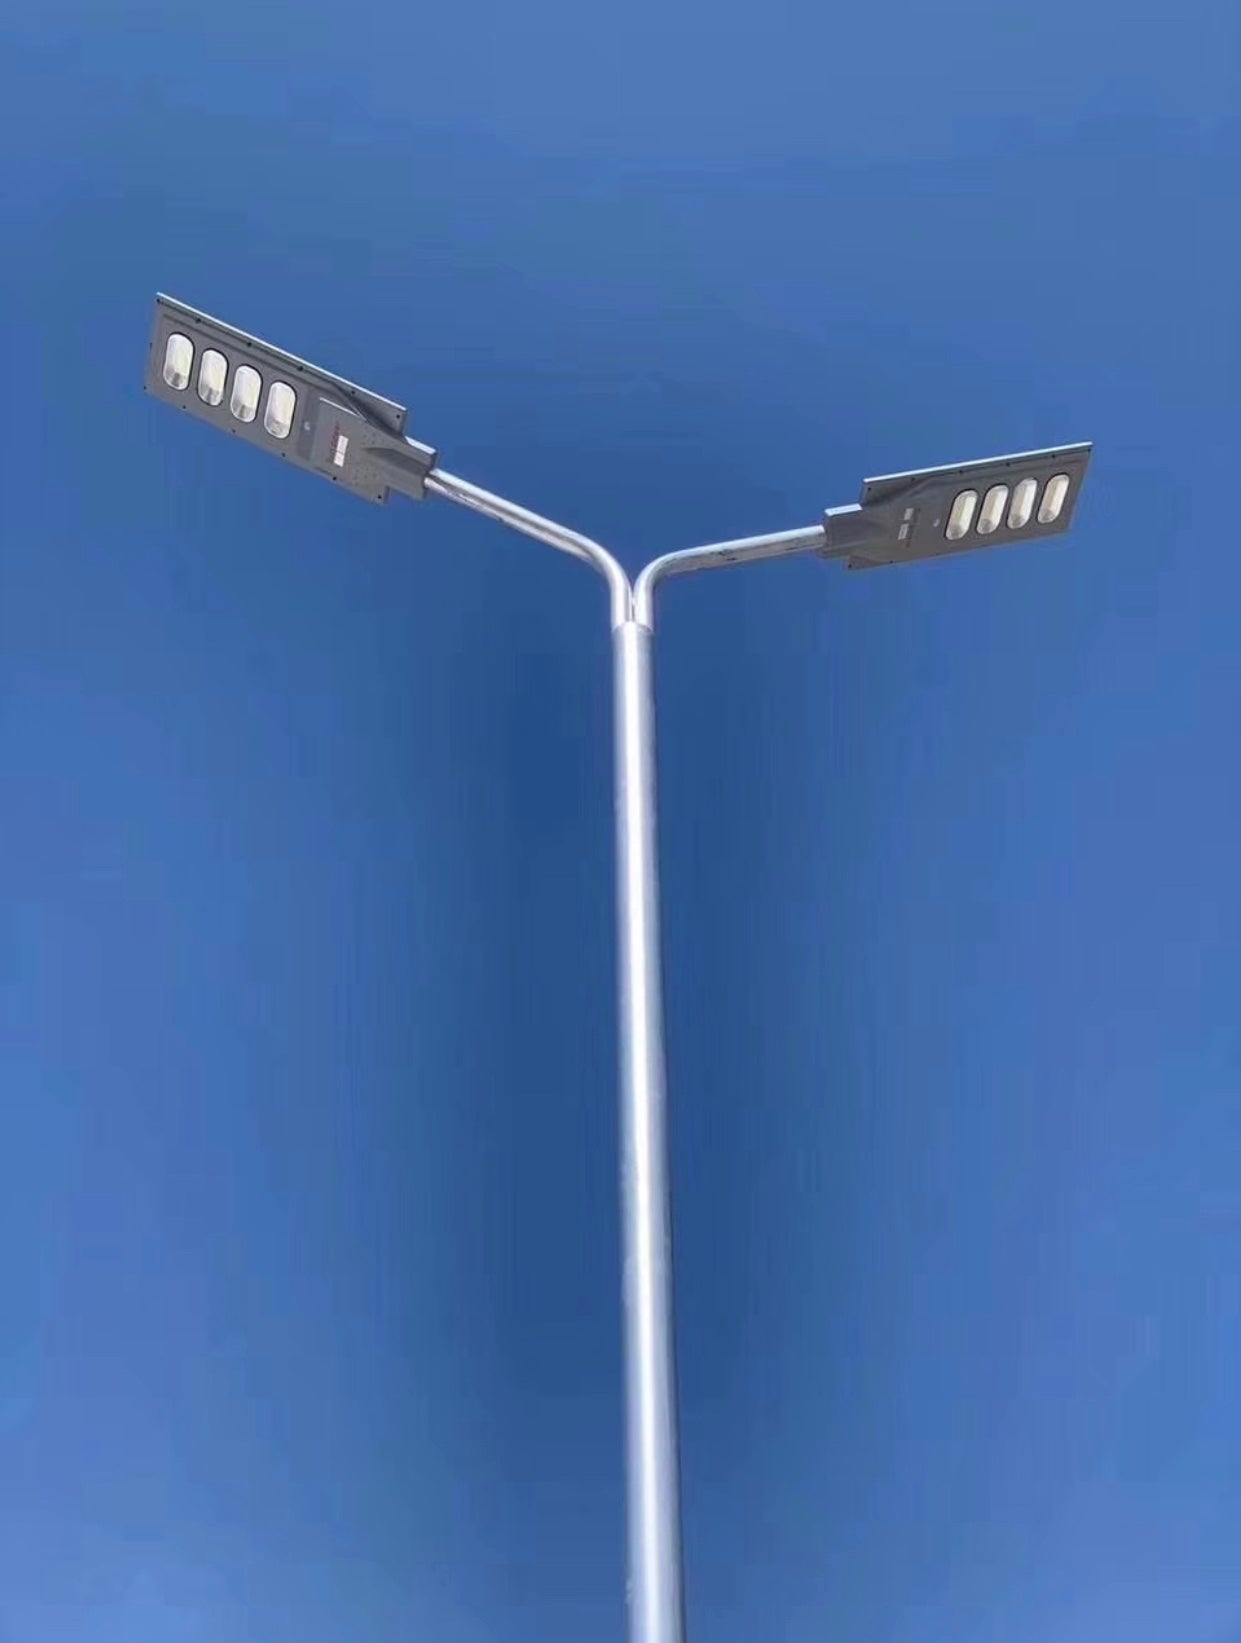 Coarts Solar Abs 120w Street Light Price in Pakistan 